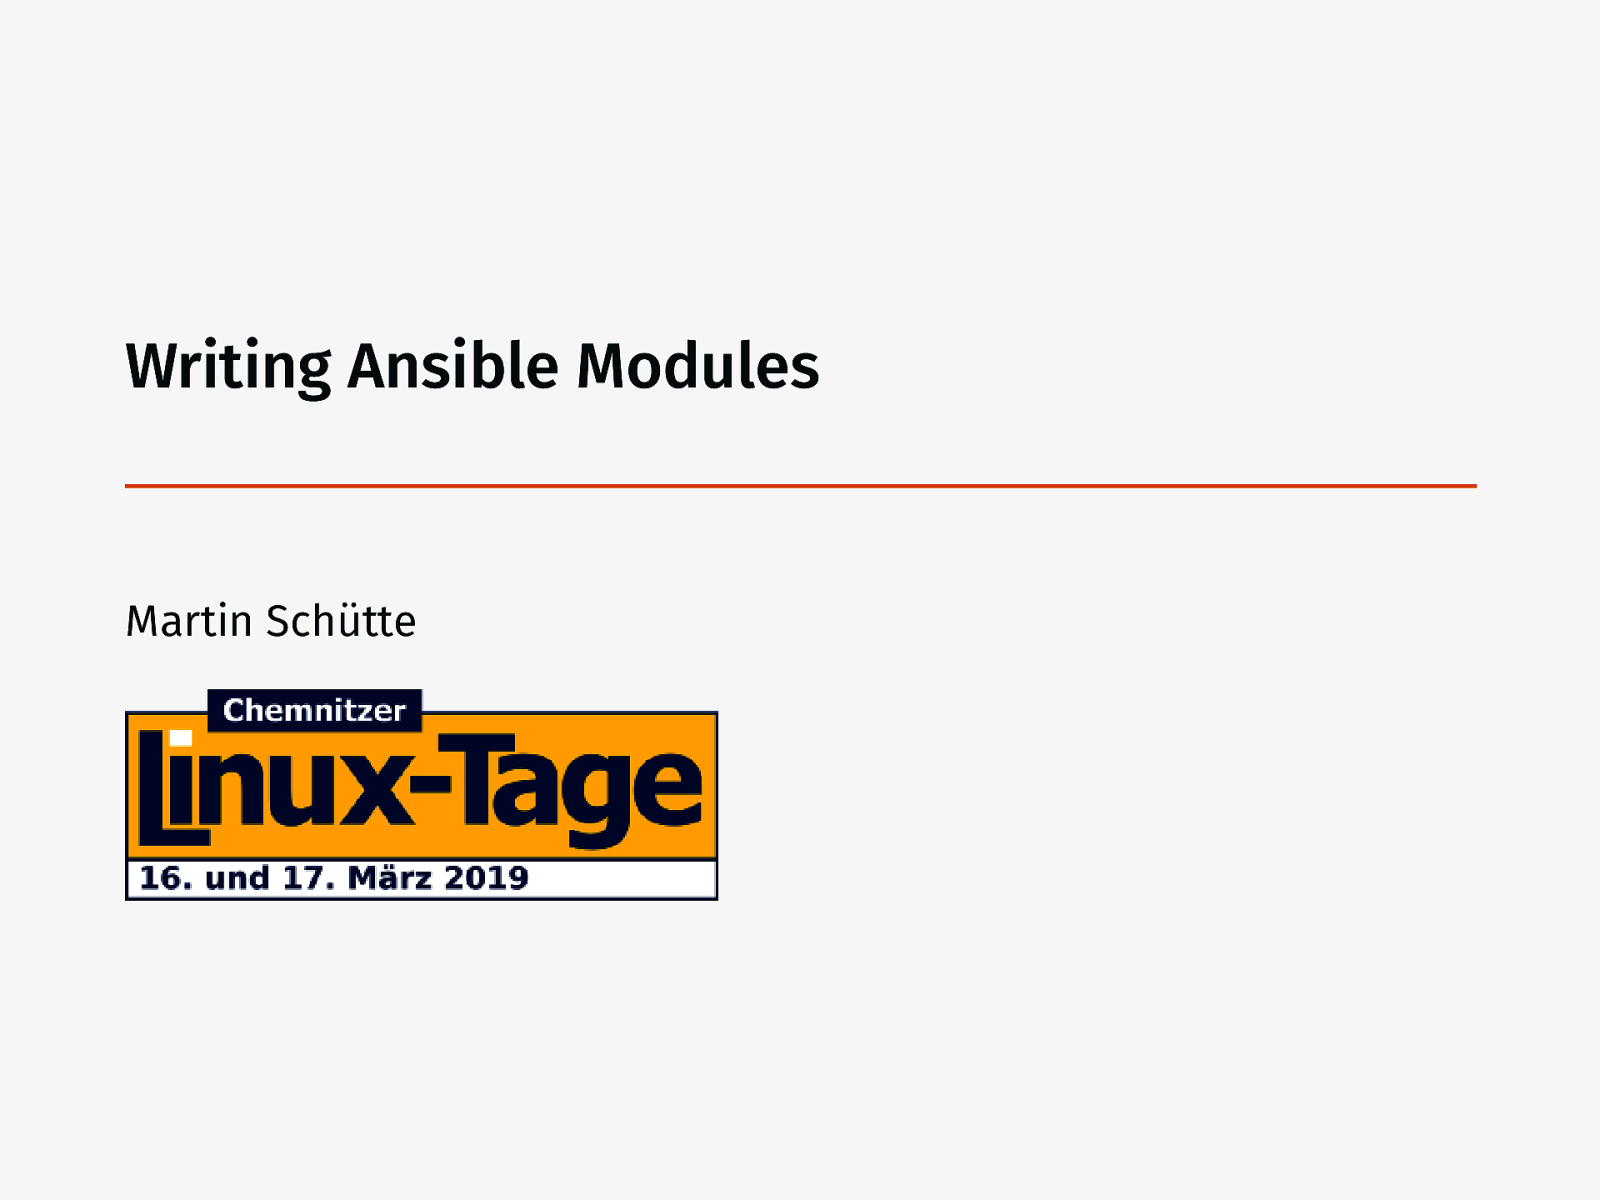 Writing Ansible Modules